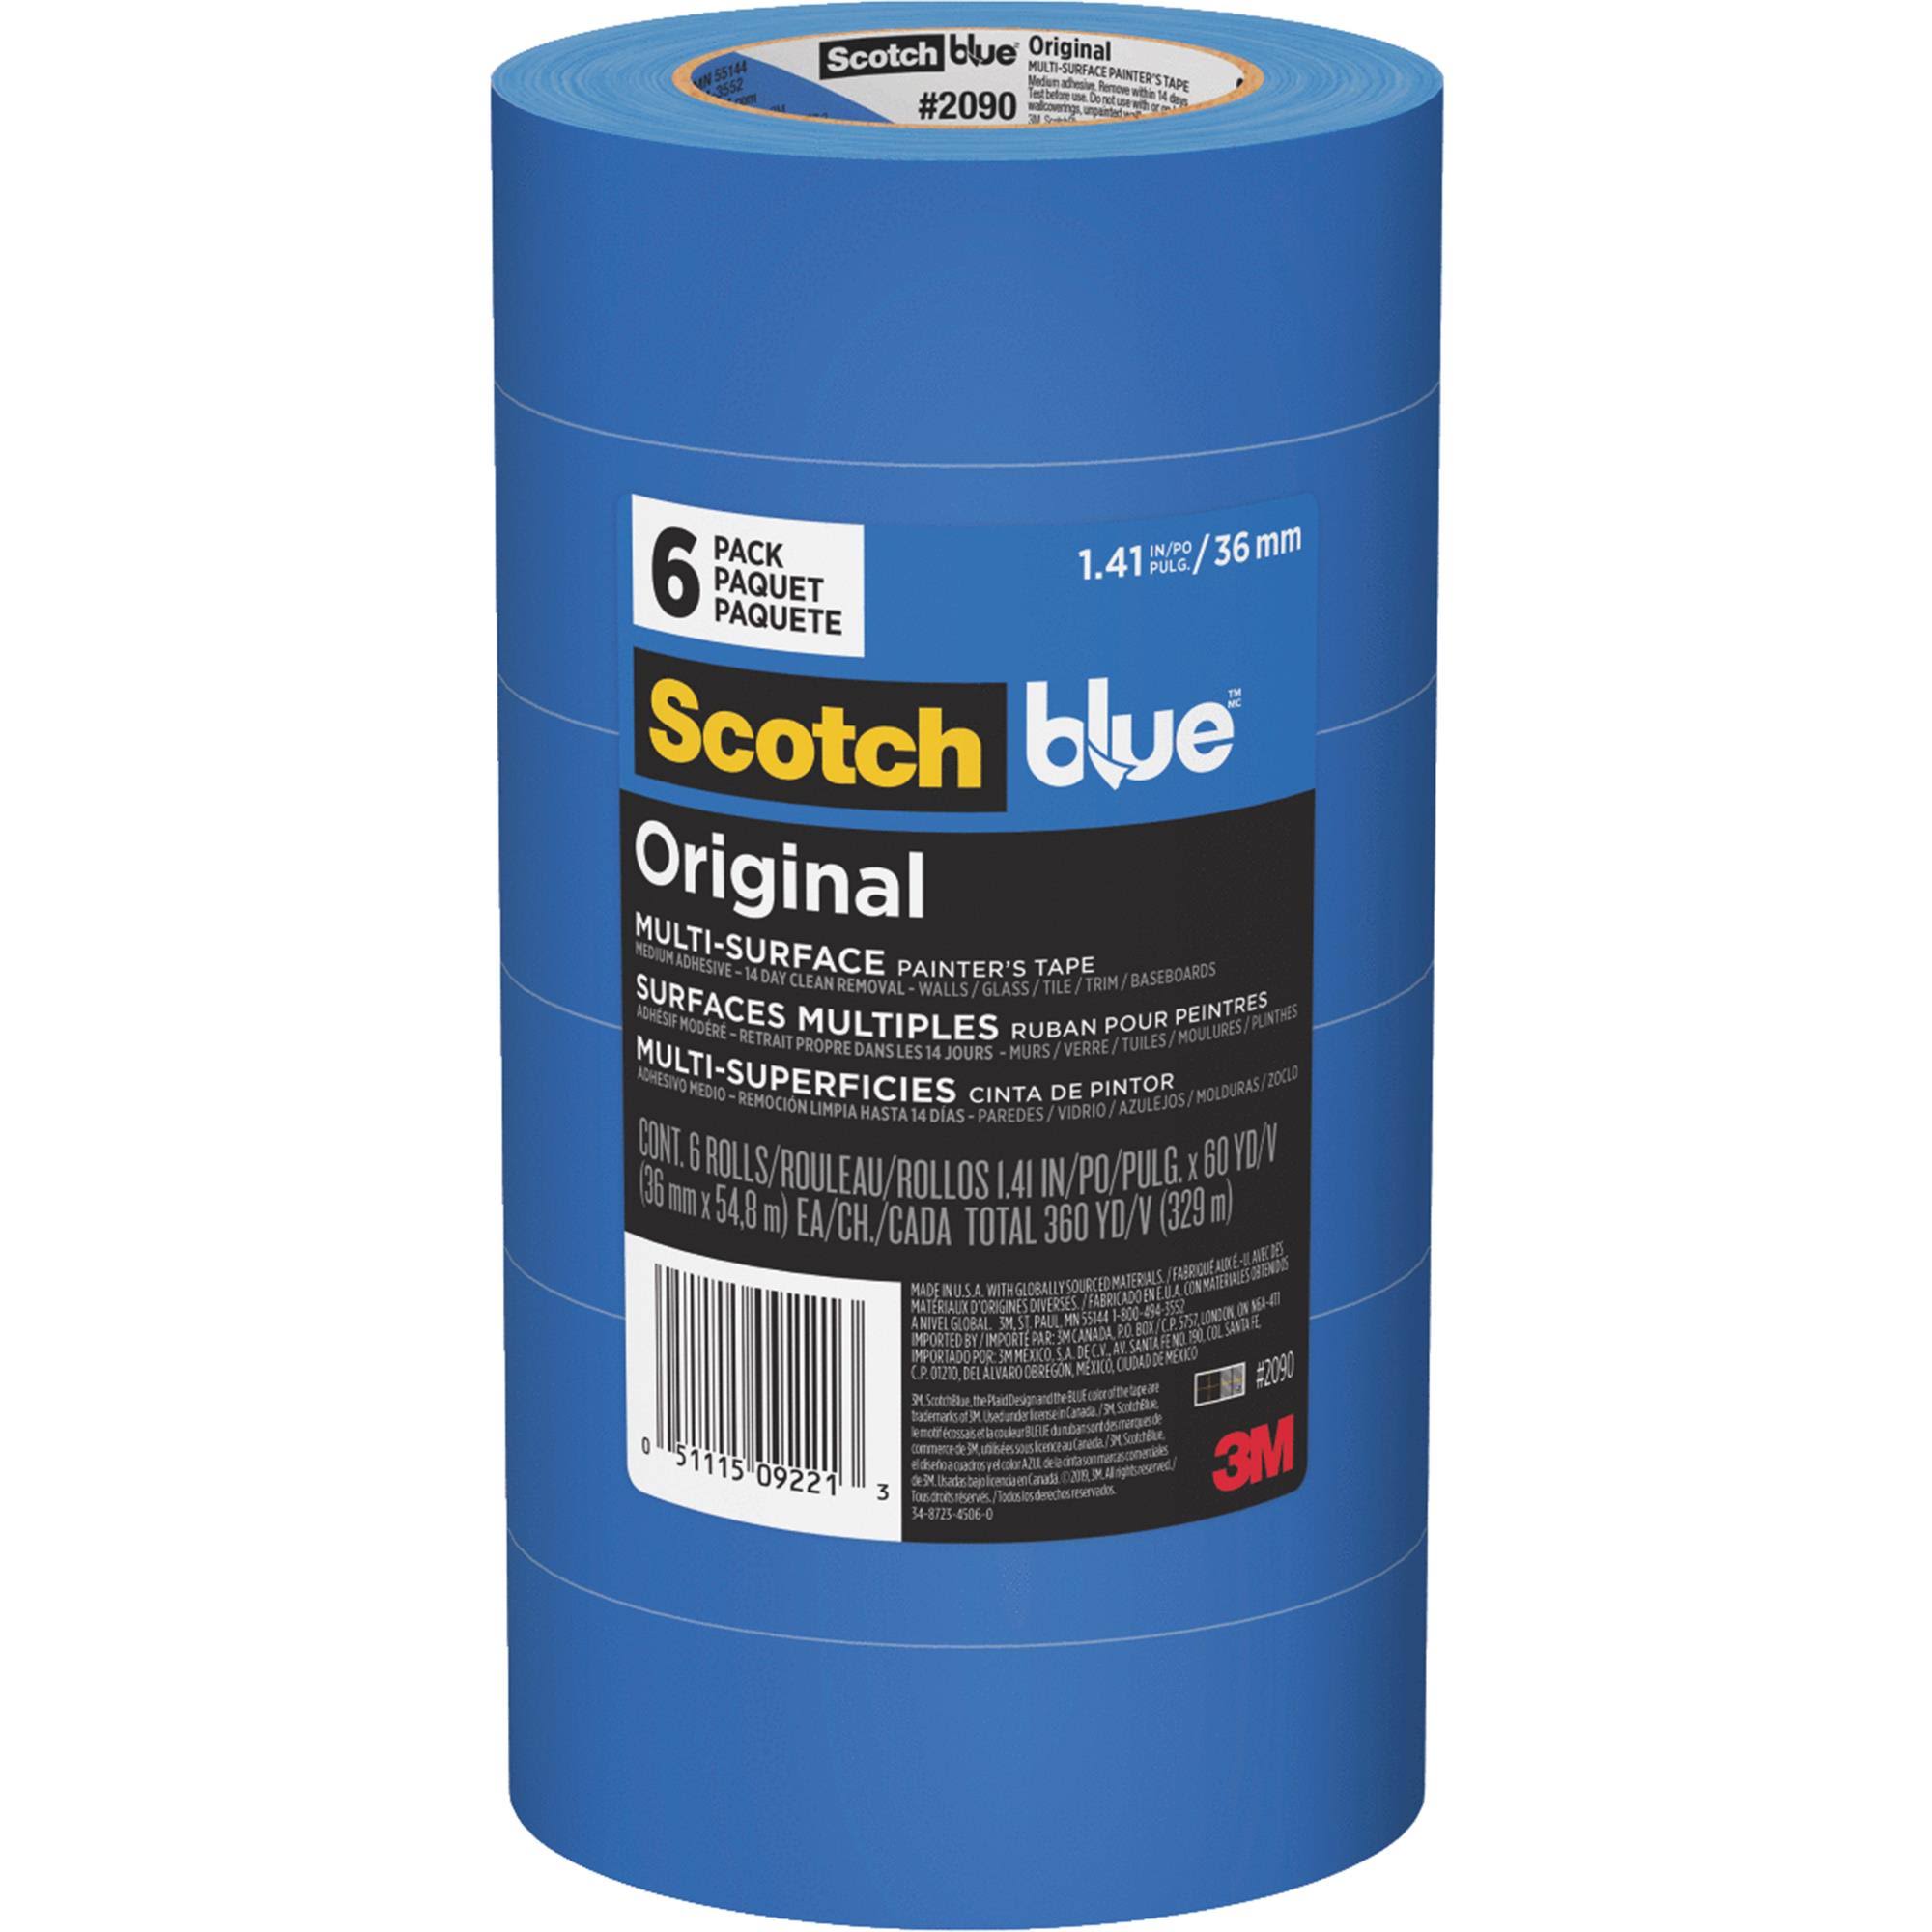 3M ScotchBlue Original Multi-Use Painter's Tape - 1.41 in x 60 yds